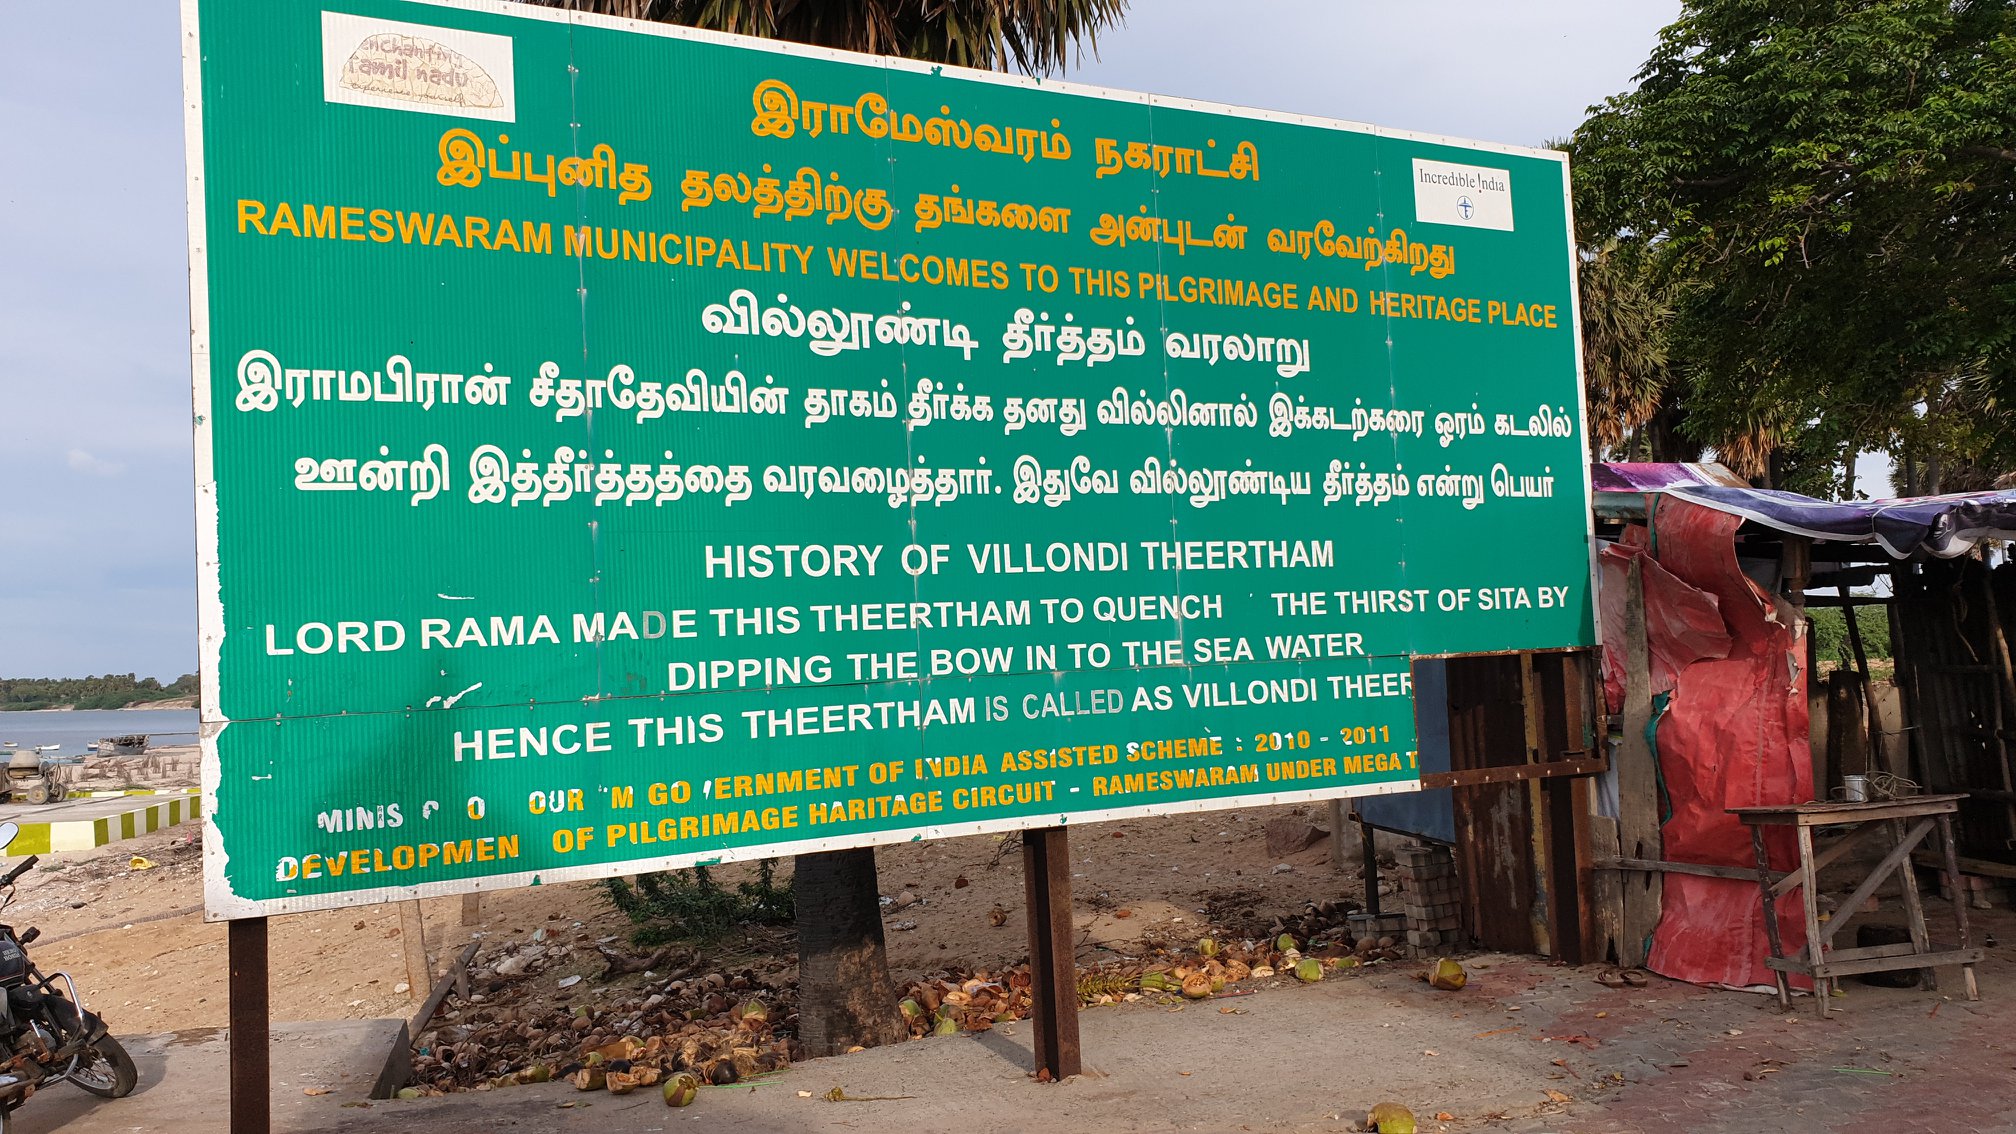 The entrance to Villondi Theertham-Rameswaram